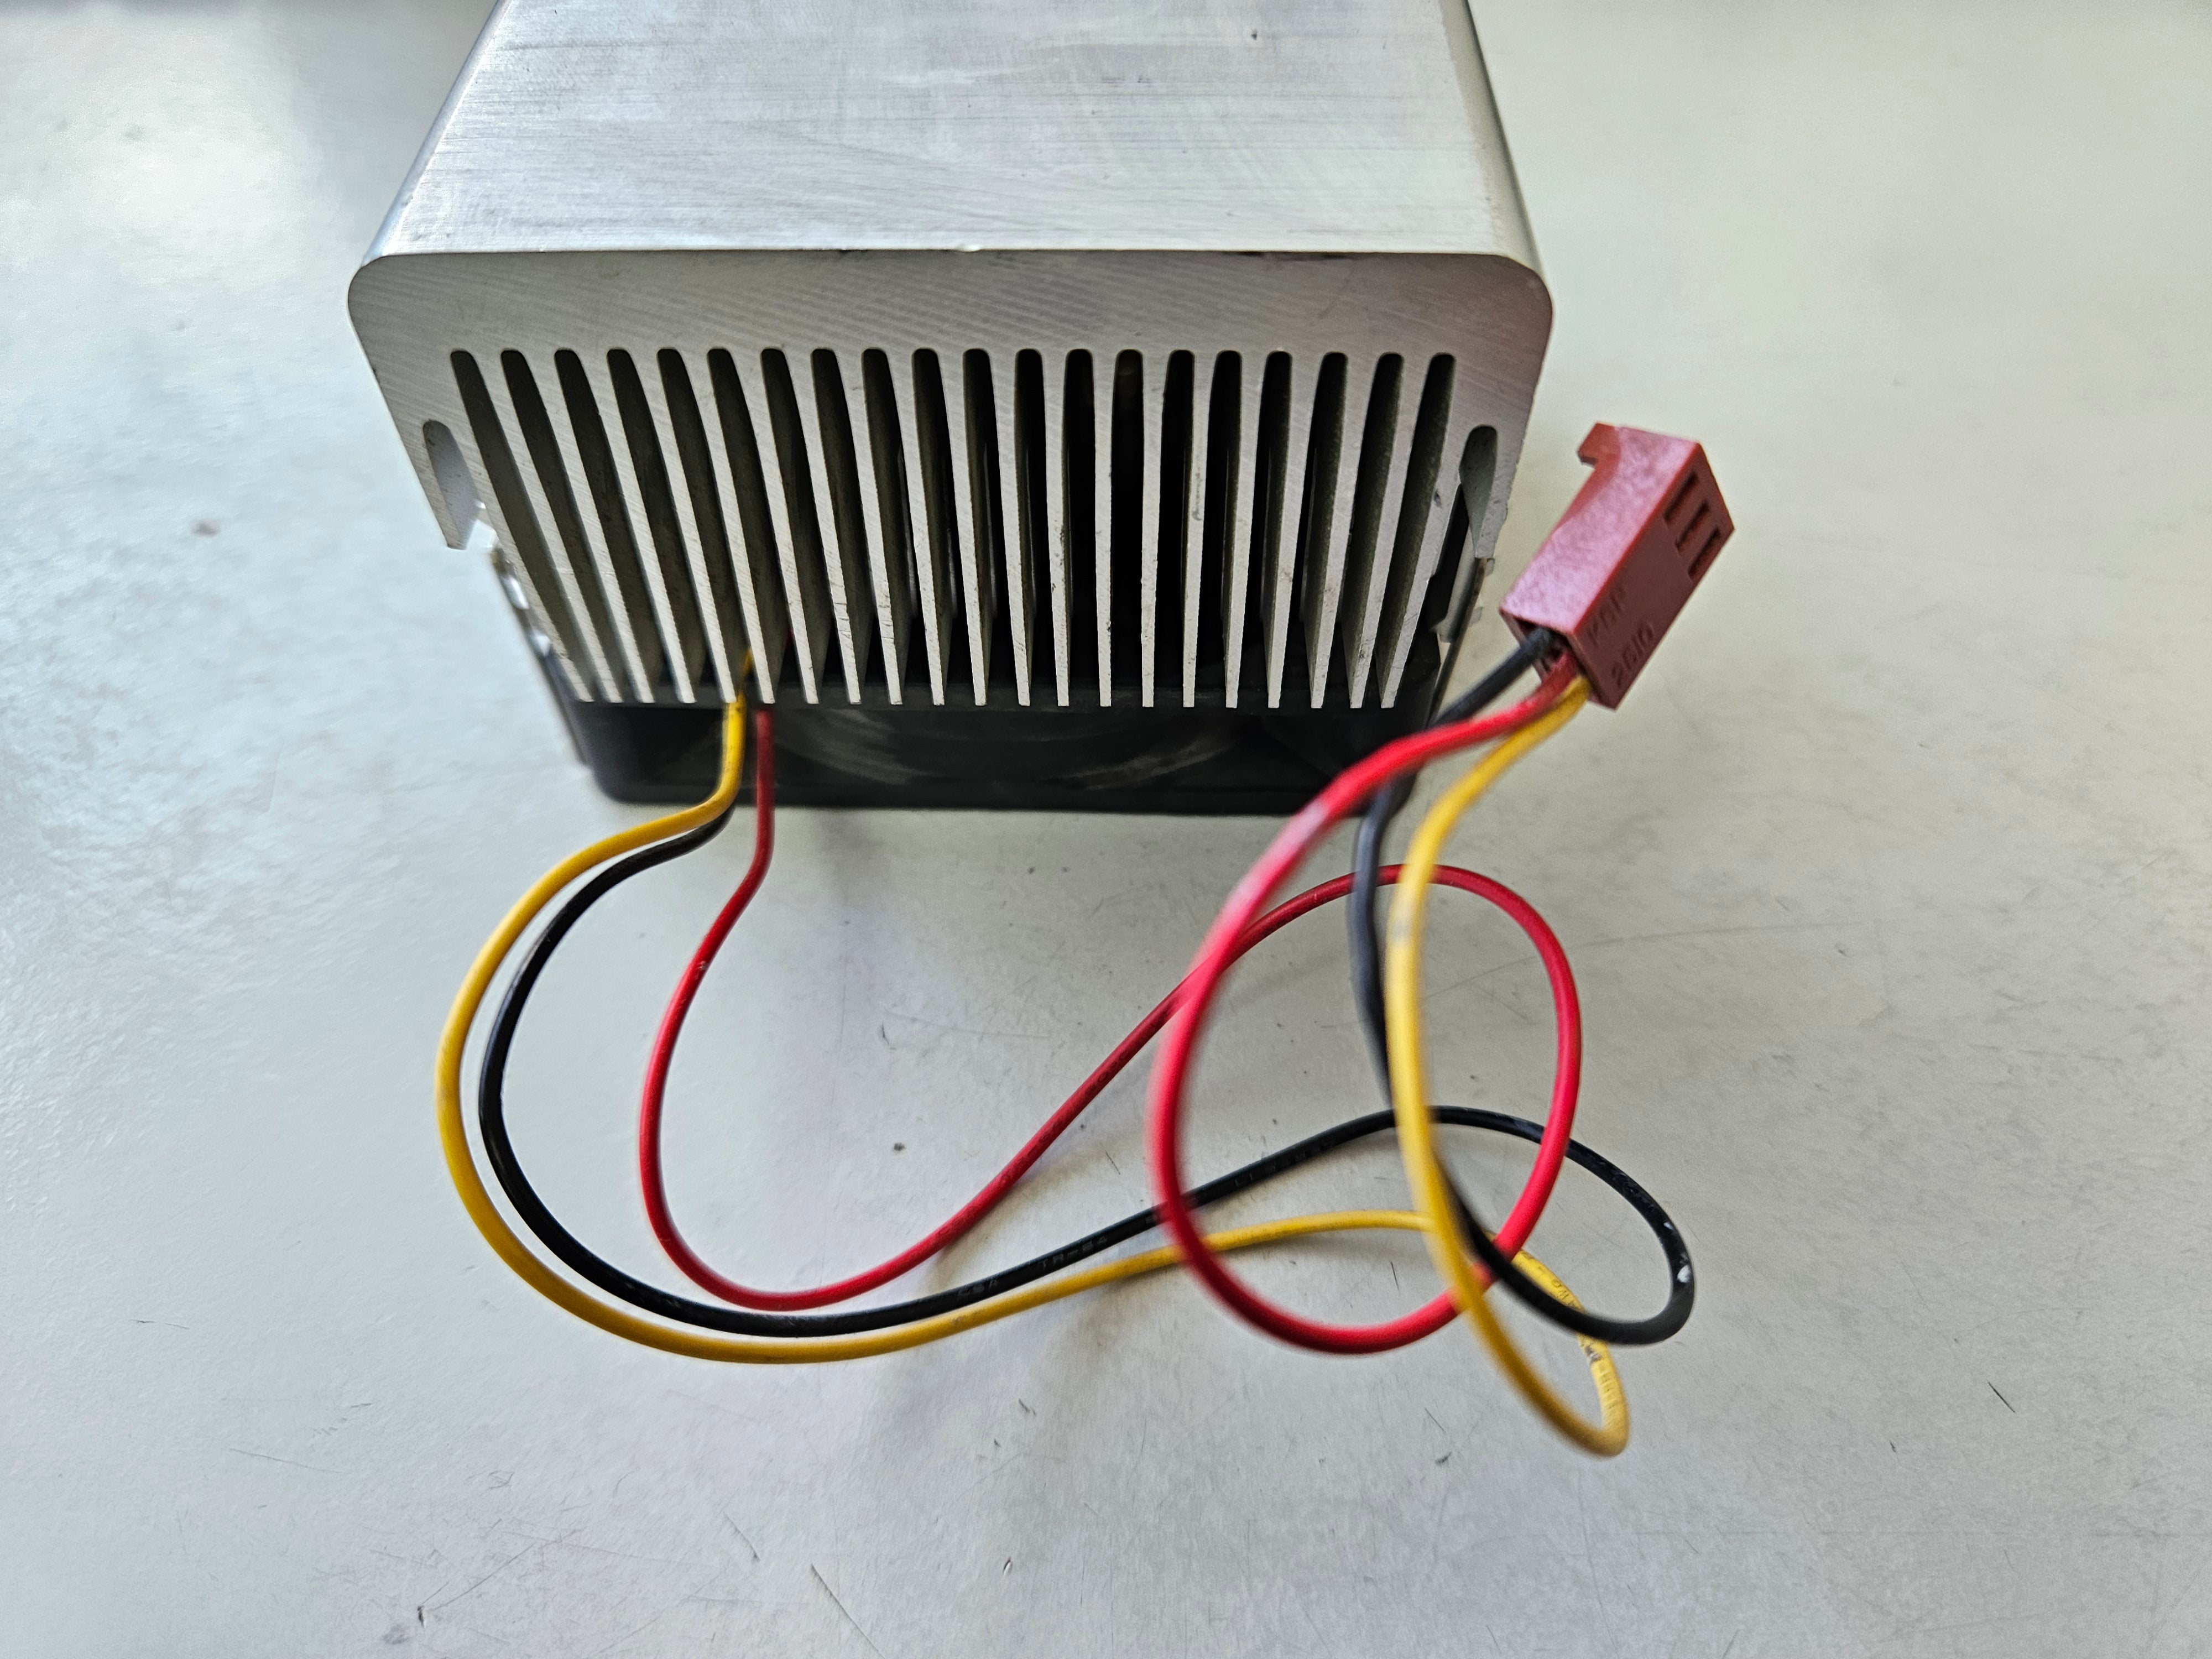 Tsunami DC12V 0.3A 3Pin 3Wire CPU Cooling Fan with Heatsink ( TSUNAMIFAN ) USED